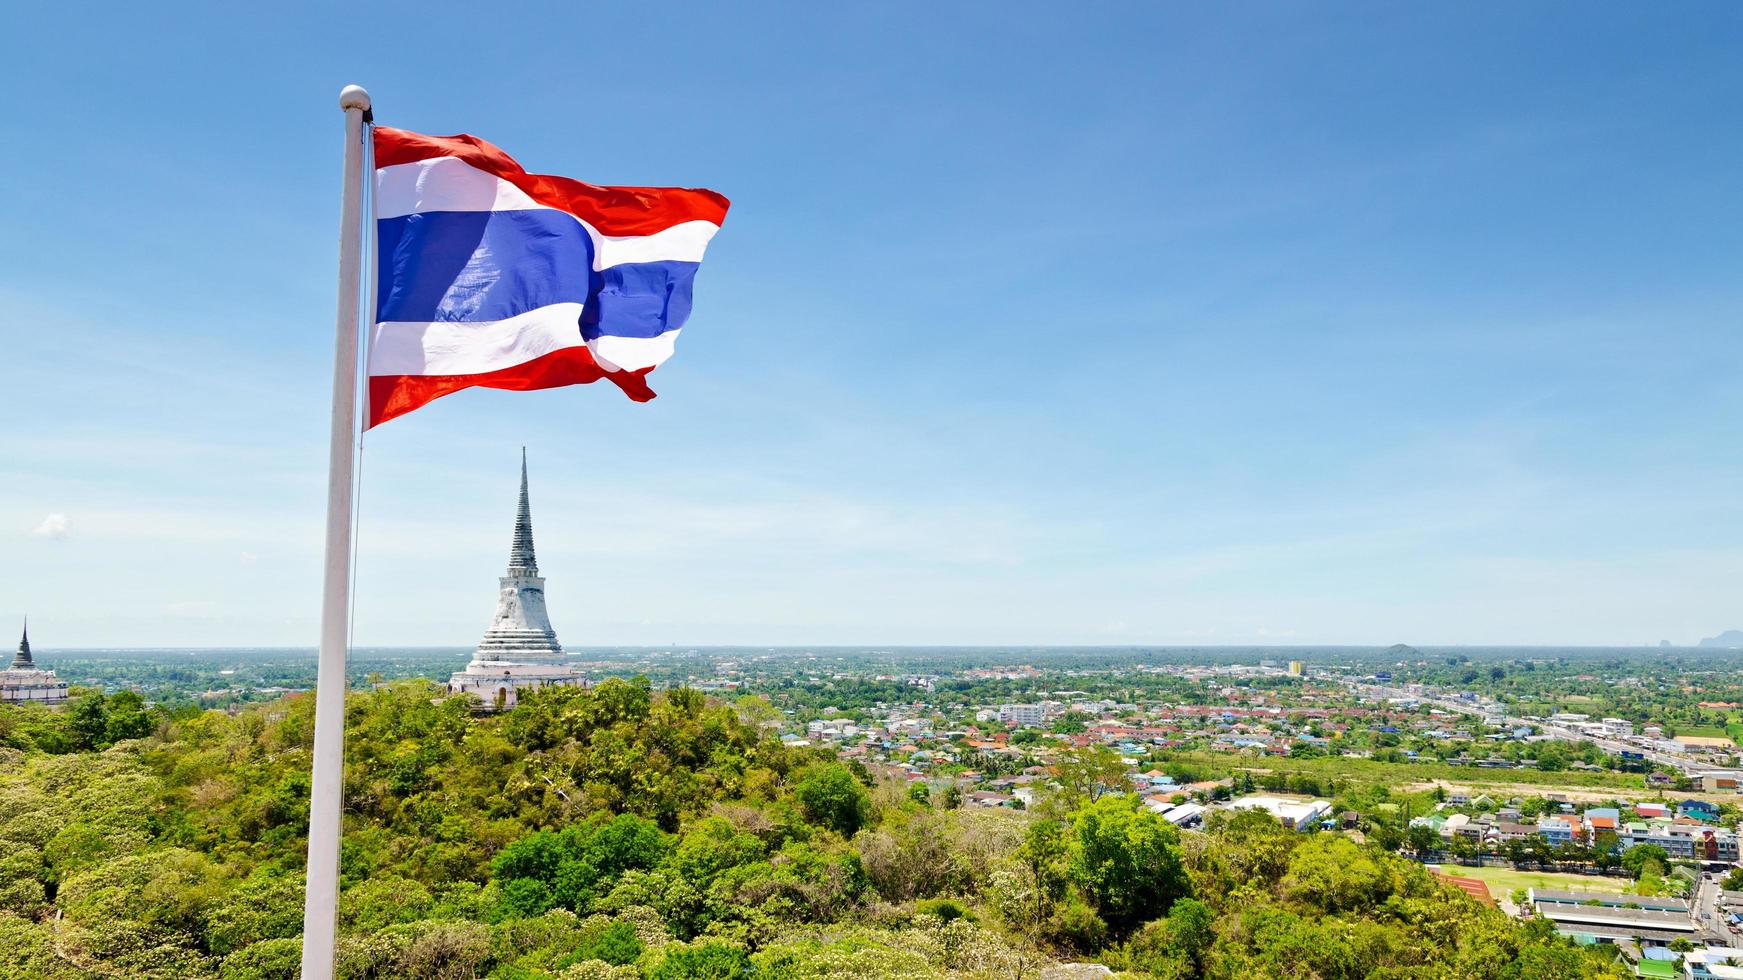 Thai flag waving in the wind photo